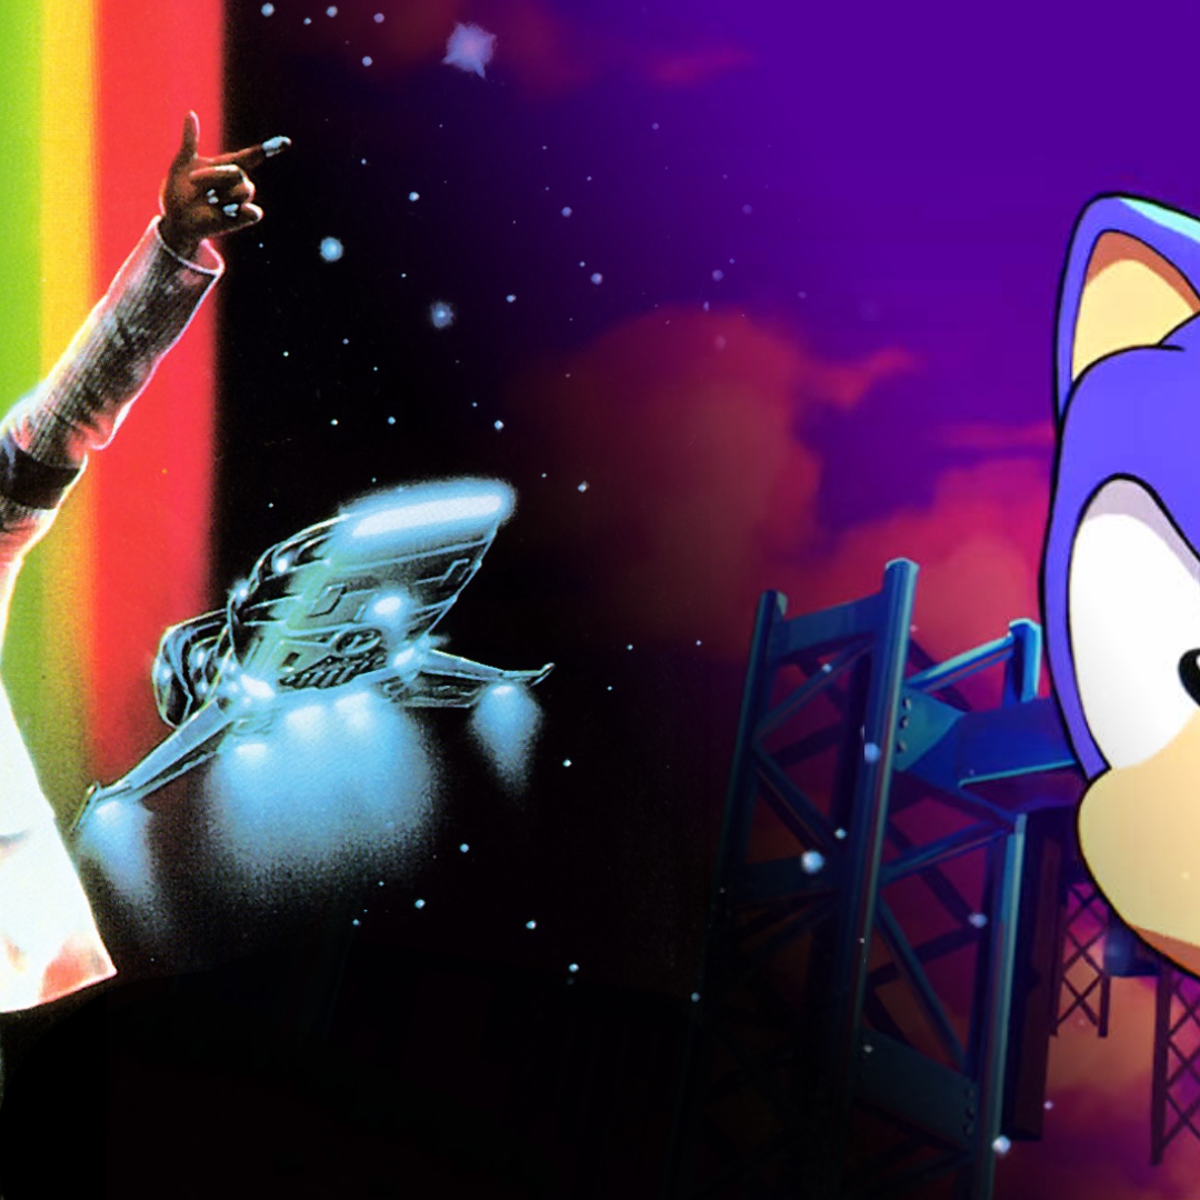 Sega confirms Sonic 3 won't have its original music in Sonic